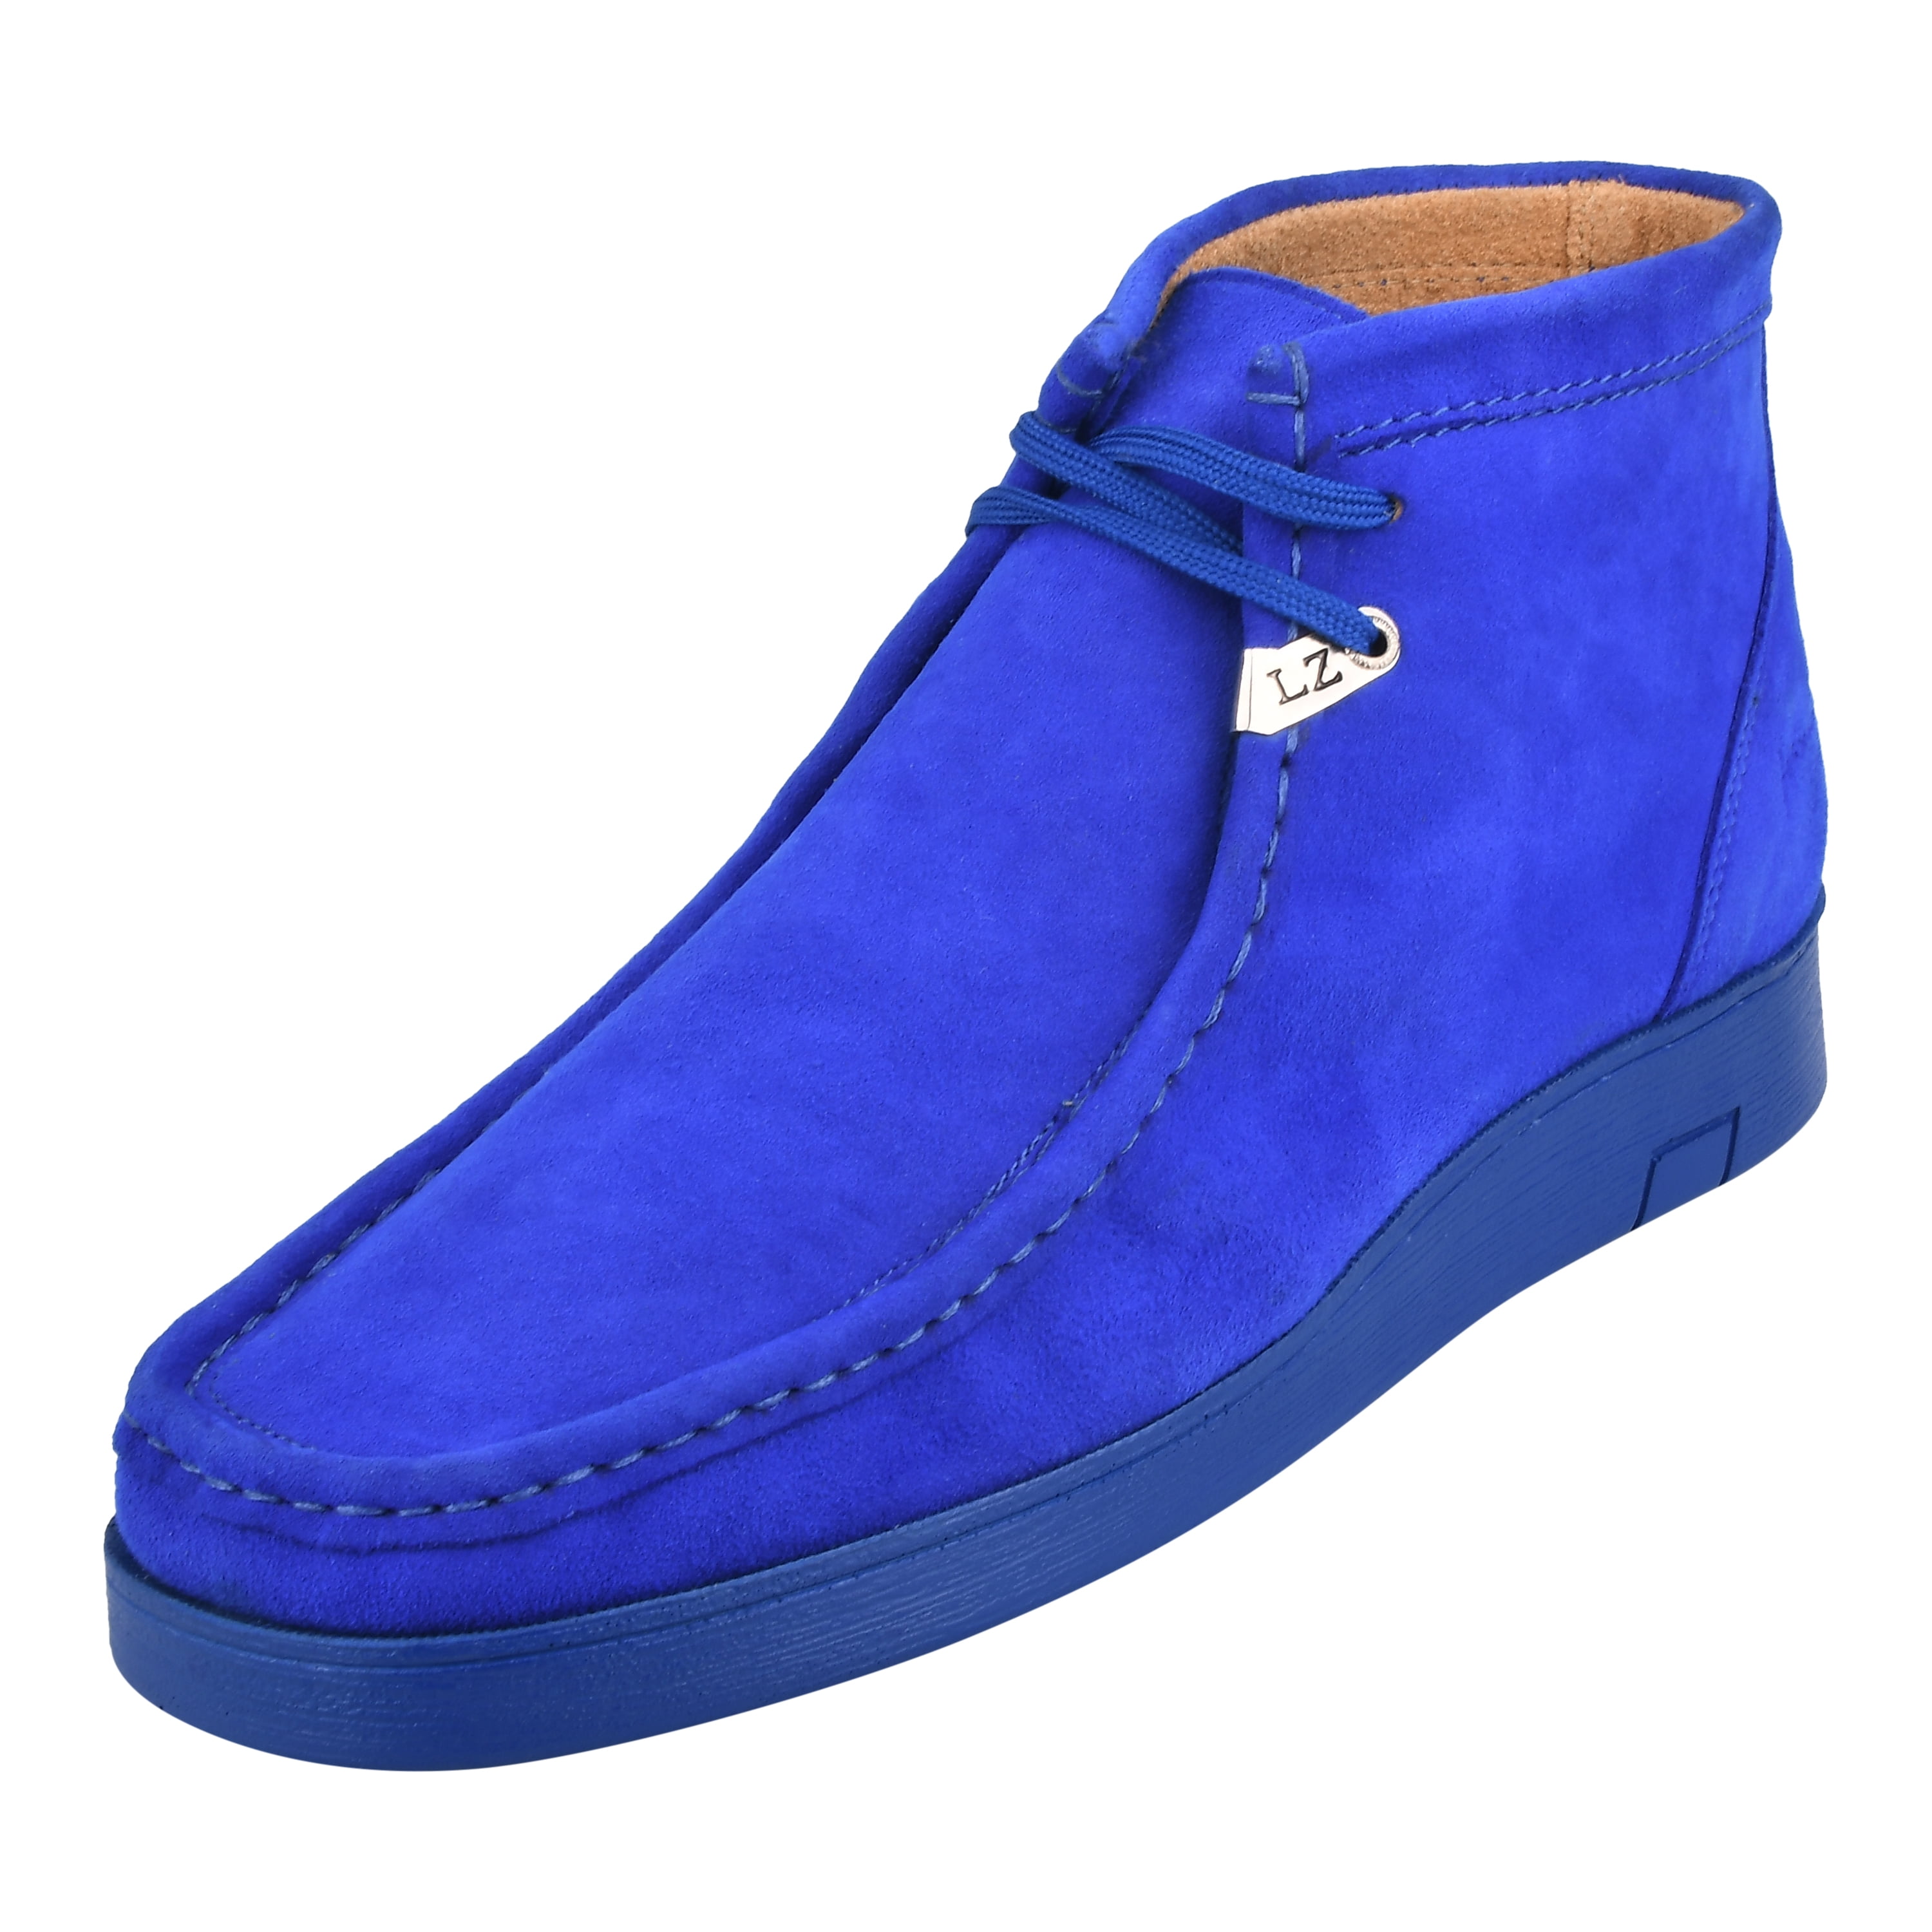 HAMARA JOE Mens Waterproof Suede Leather High Top Casual shoes Moc Toe ...